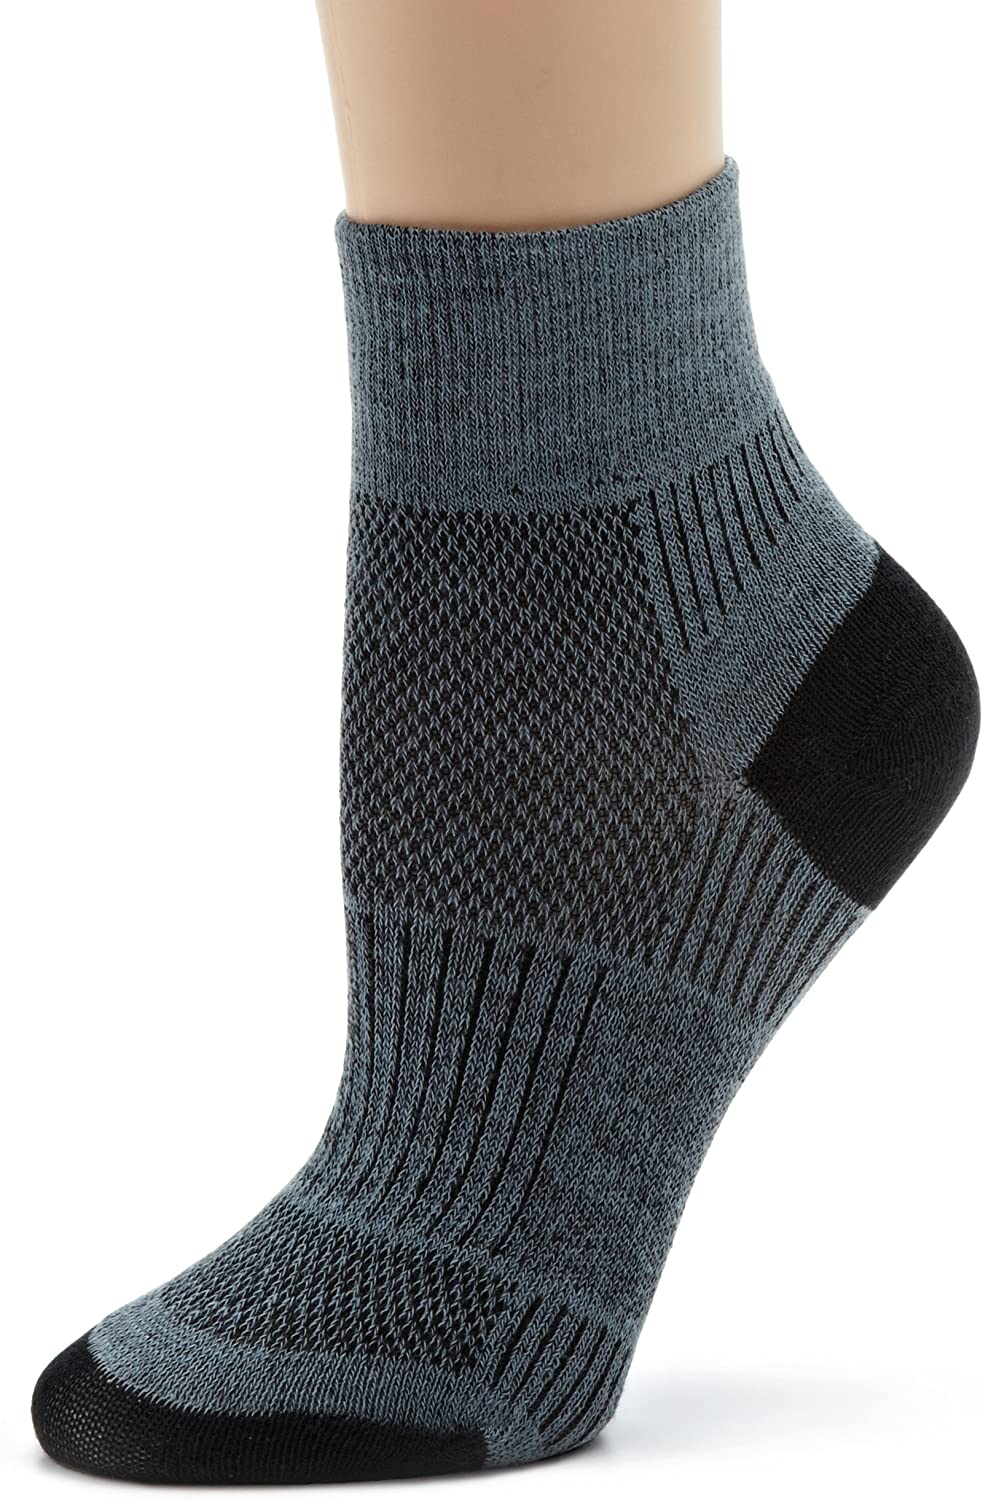 Wrightsock Women's Coolmesh Athletic Socks Three-Pack | eBay